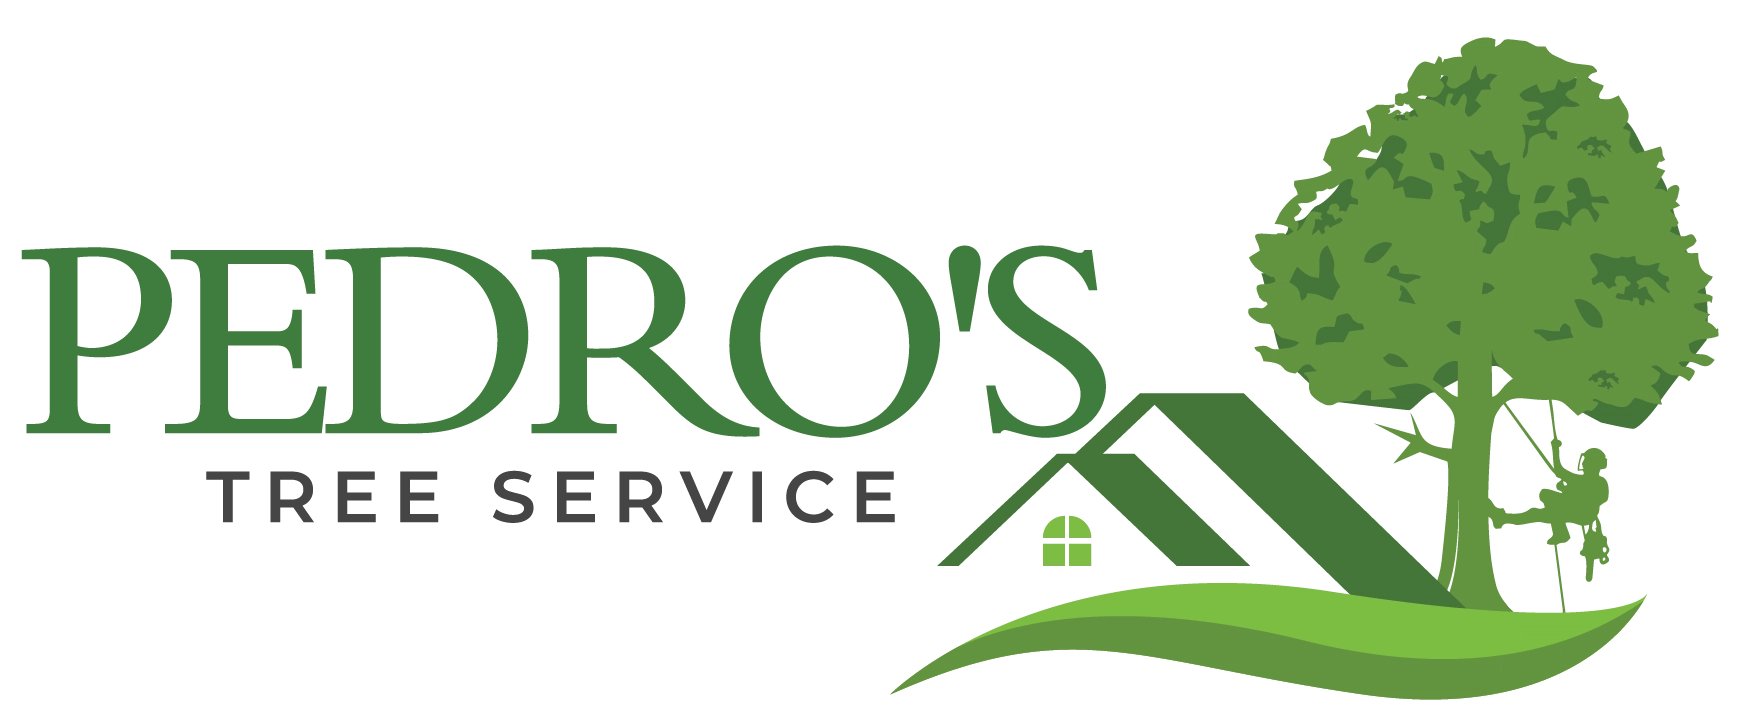 Pedro's Tree Service Logo